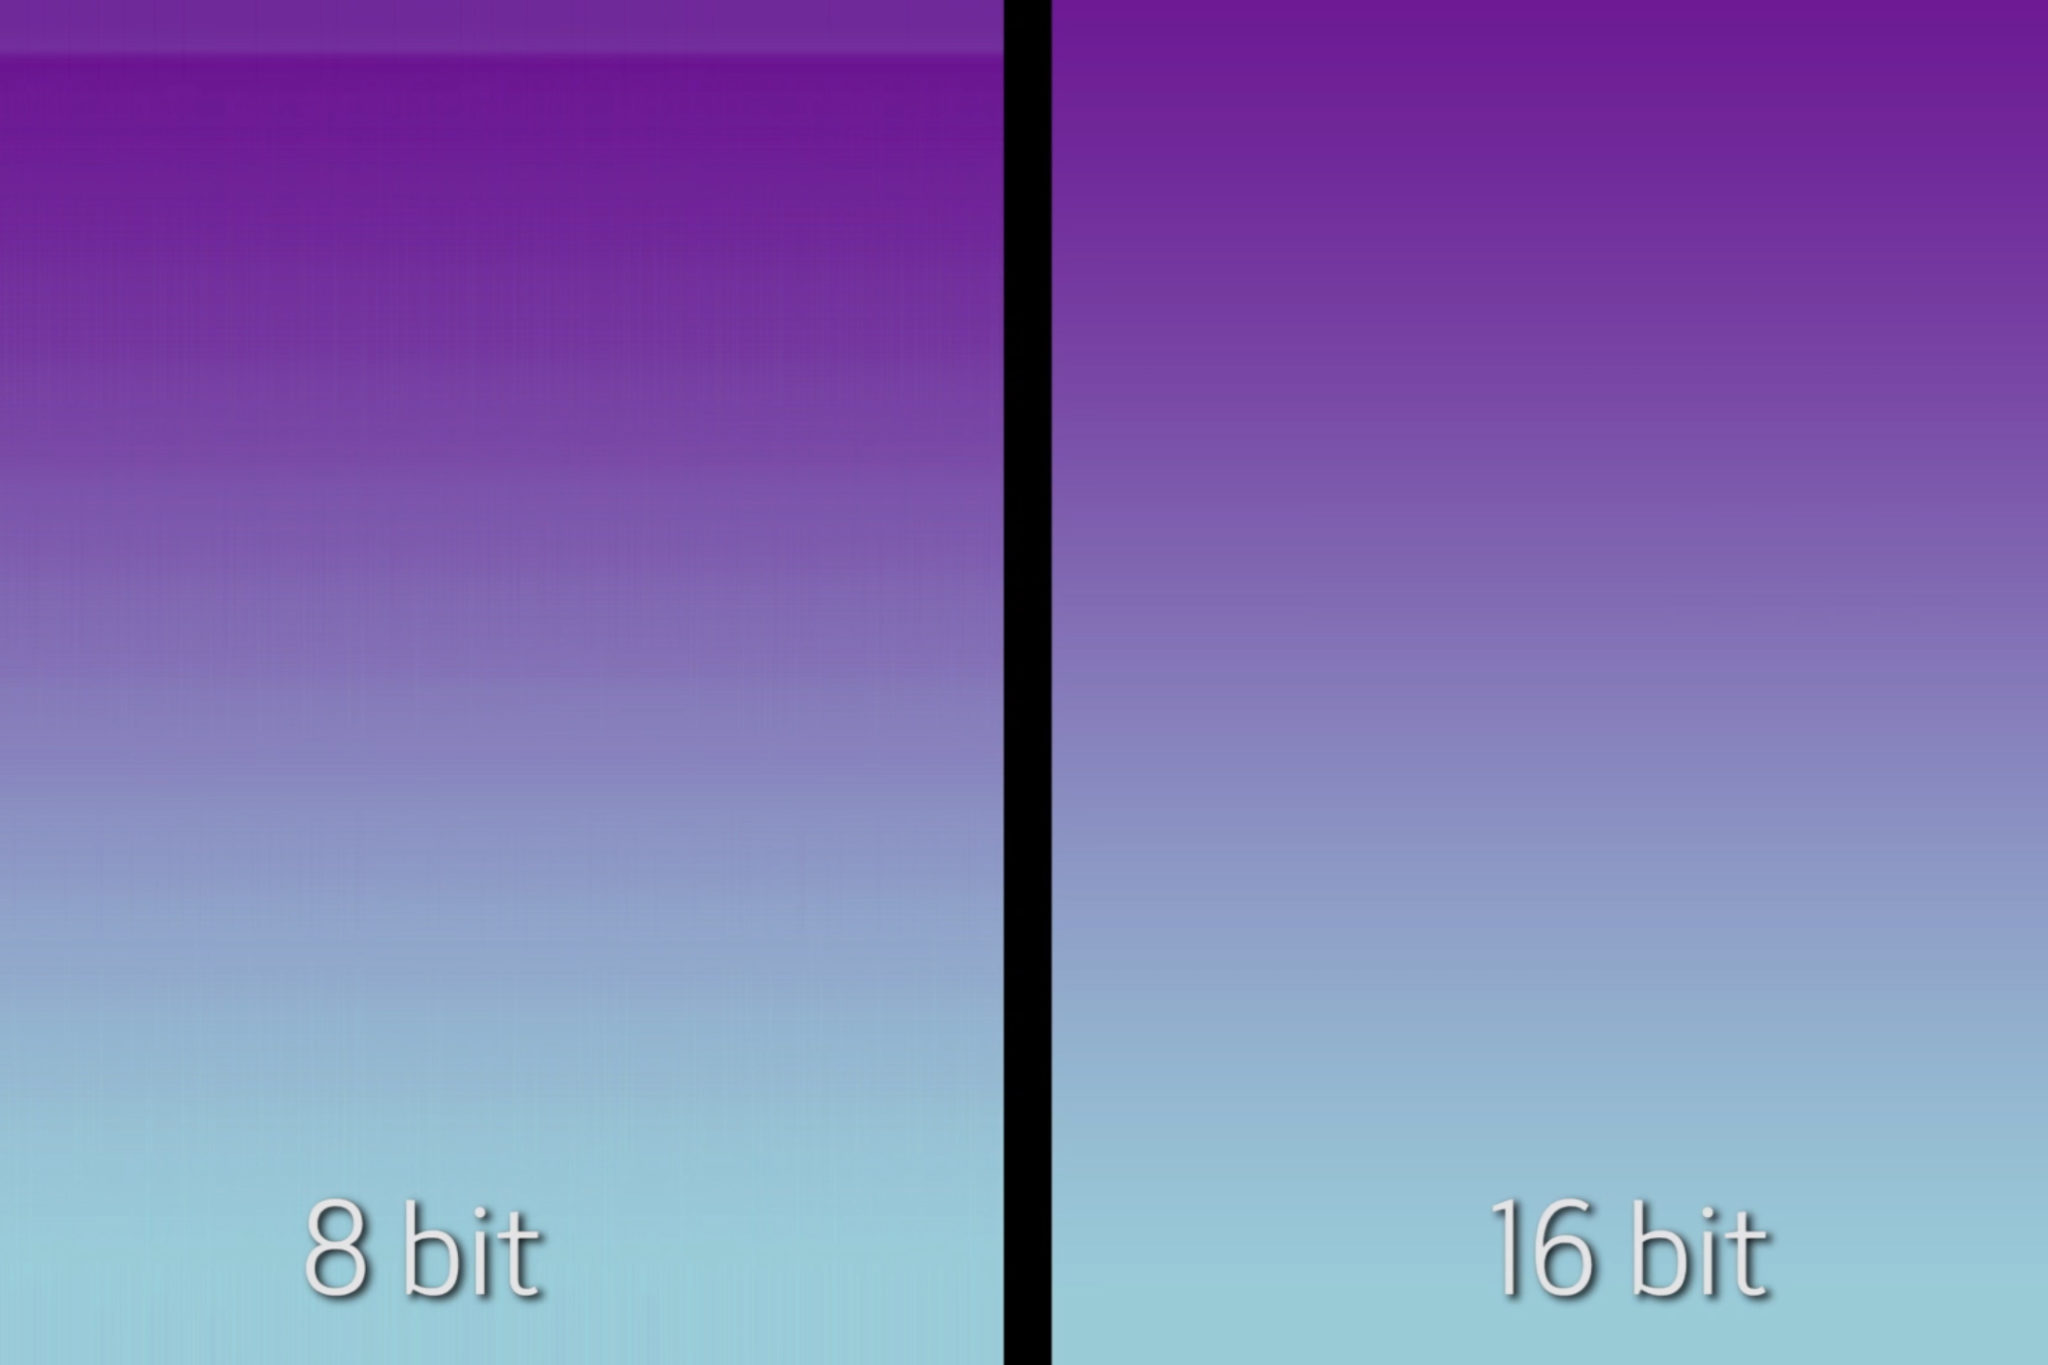 Does It Even Matter? 8-bit vs 16-bit Color Depth in Photography